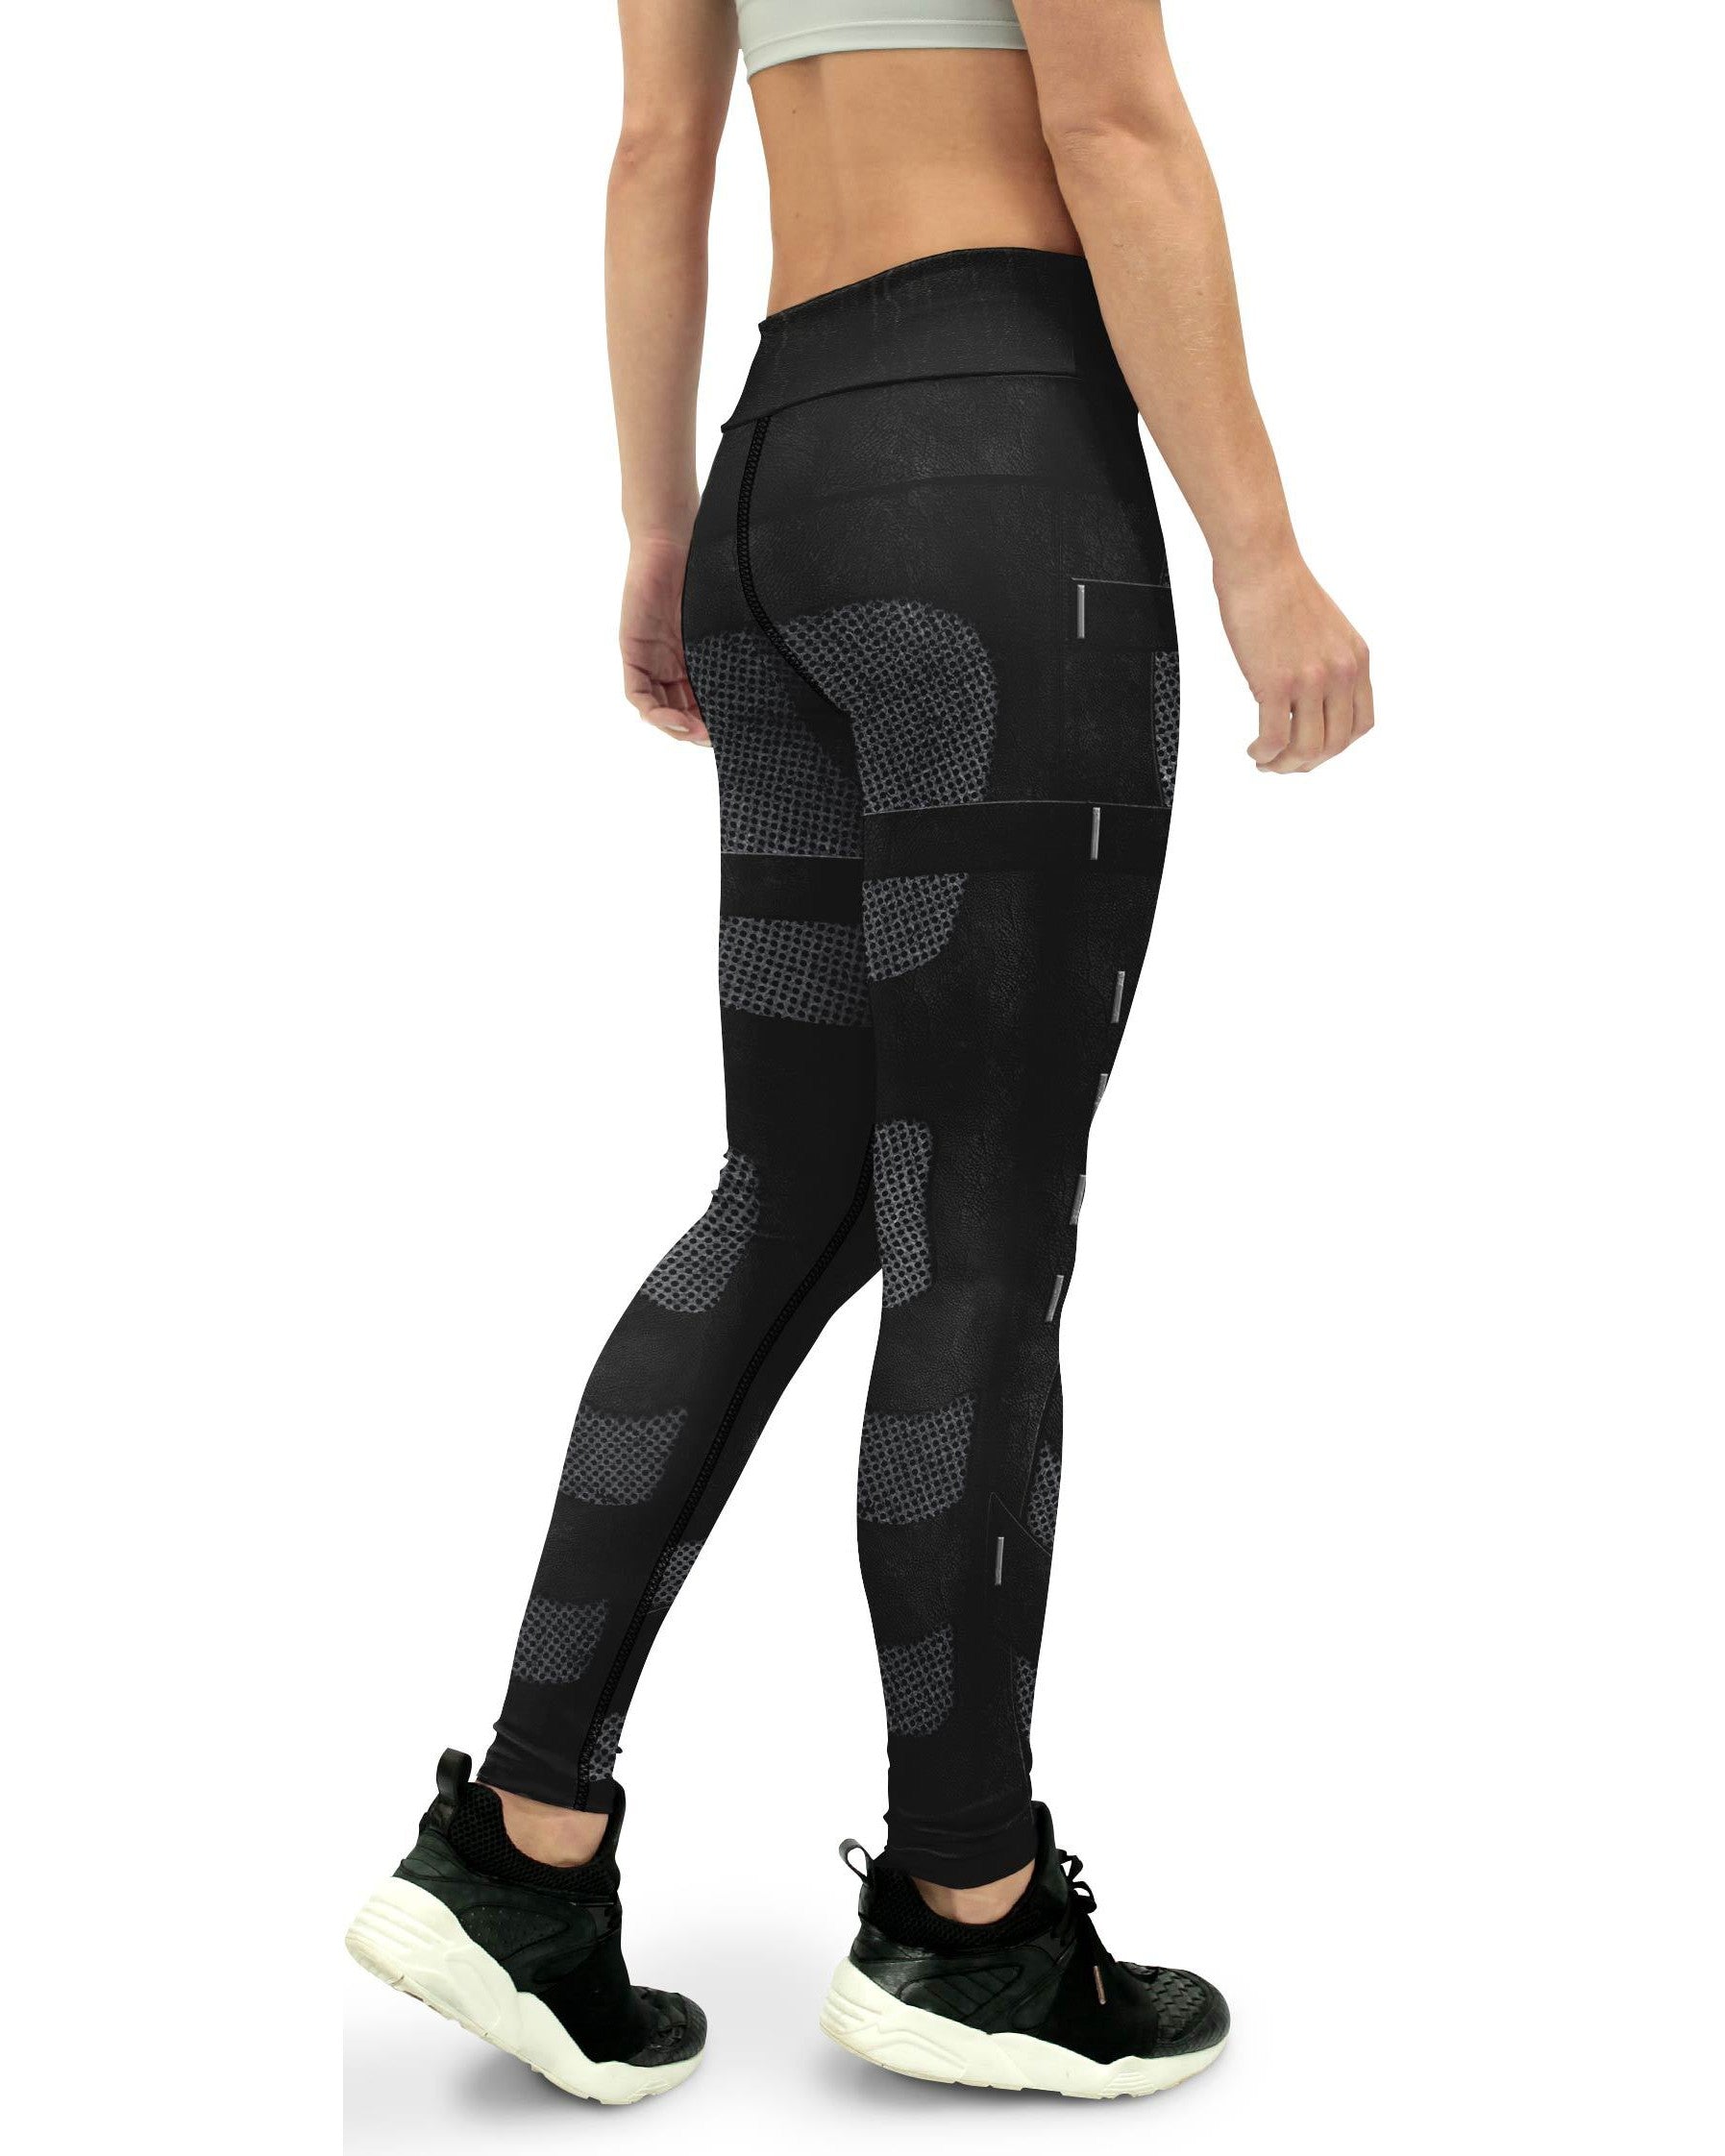 Black tights / leggins in size s from PROZIS (european sport brand)